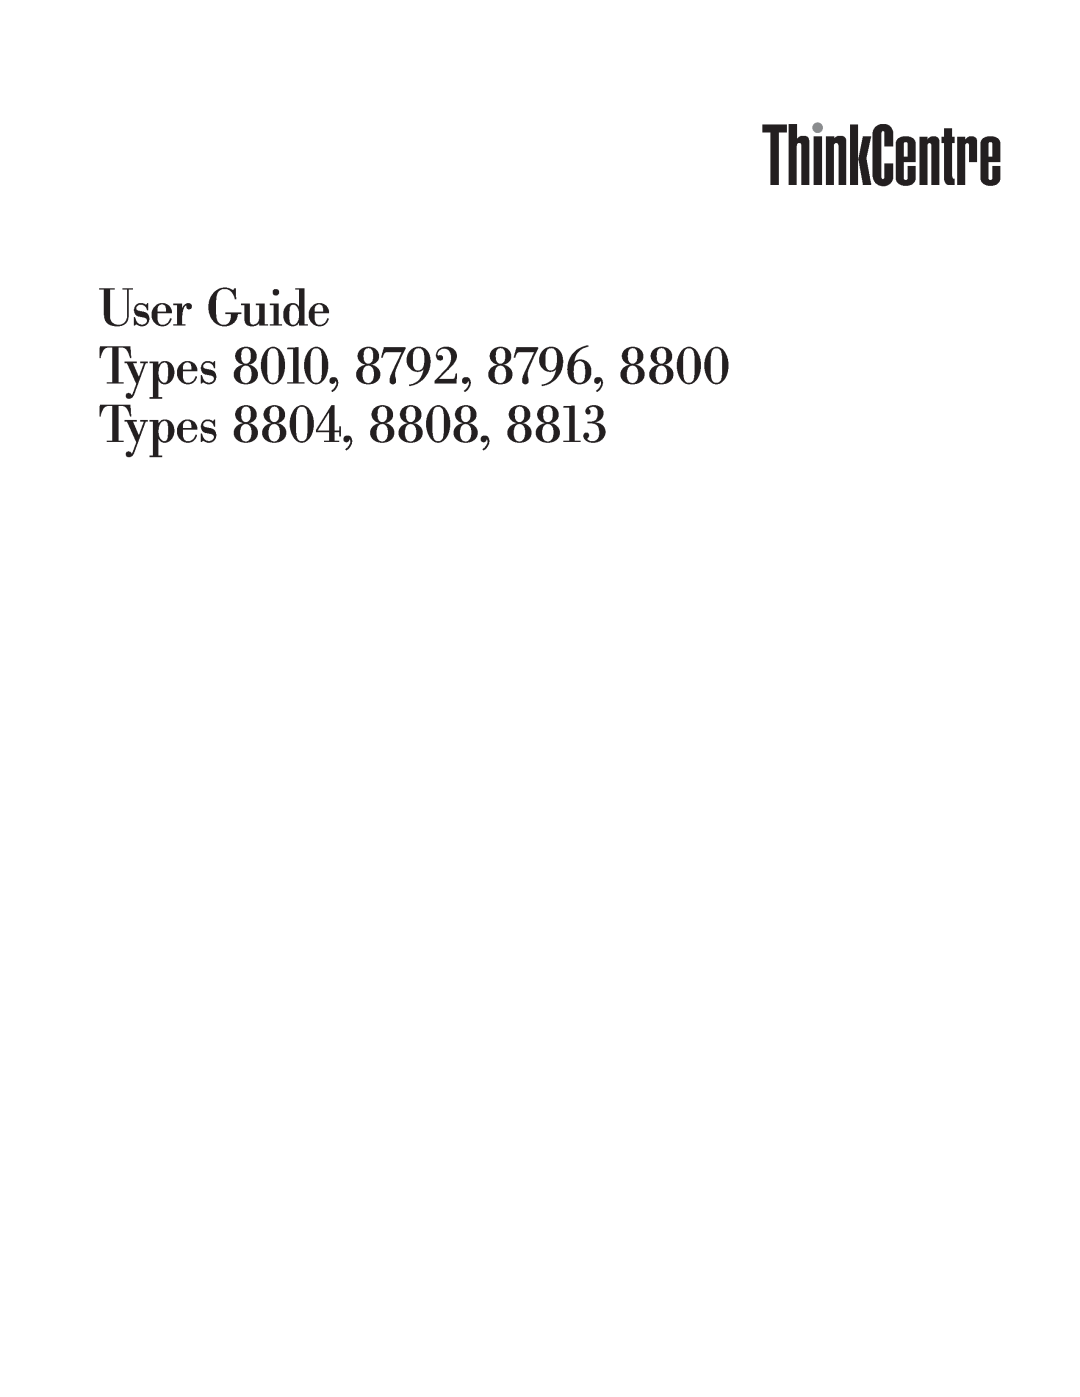 Lenovo 8800, 8813 manual User Guide Types 8010, 8792, 8796, Types 8804, 8808 